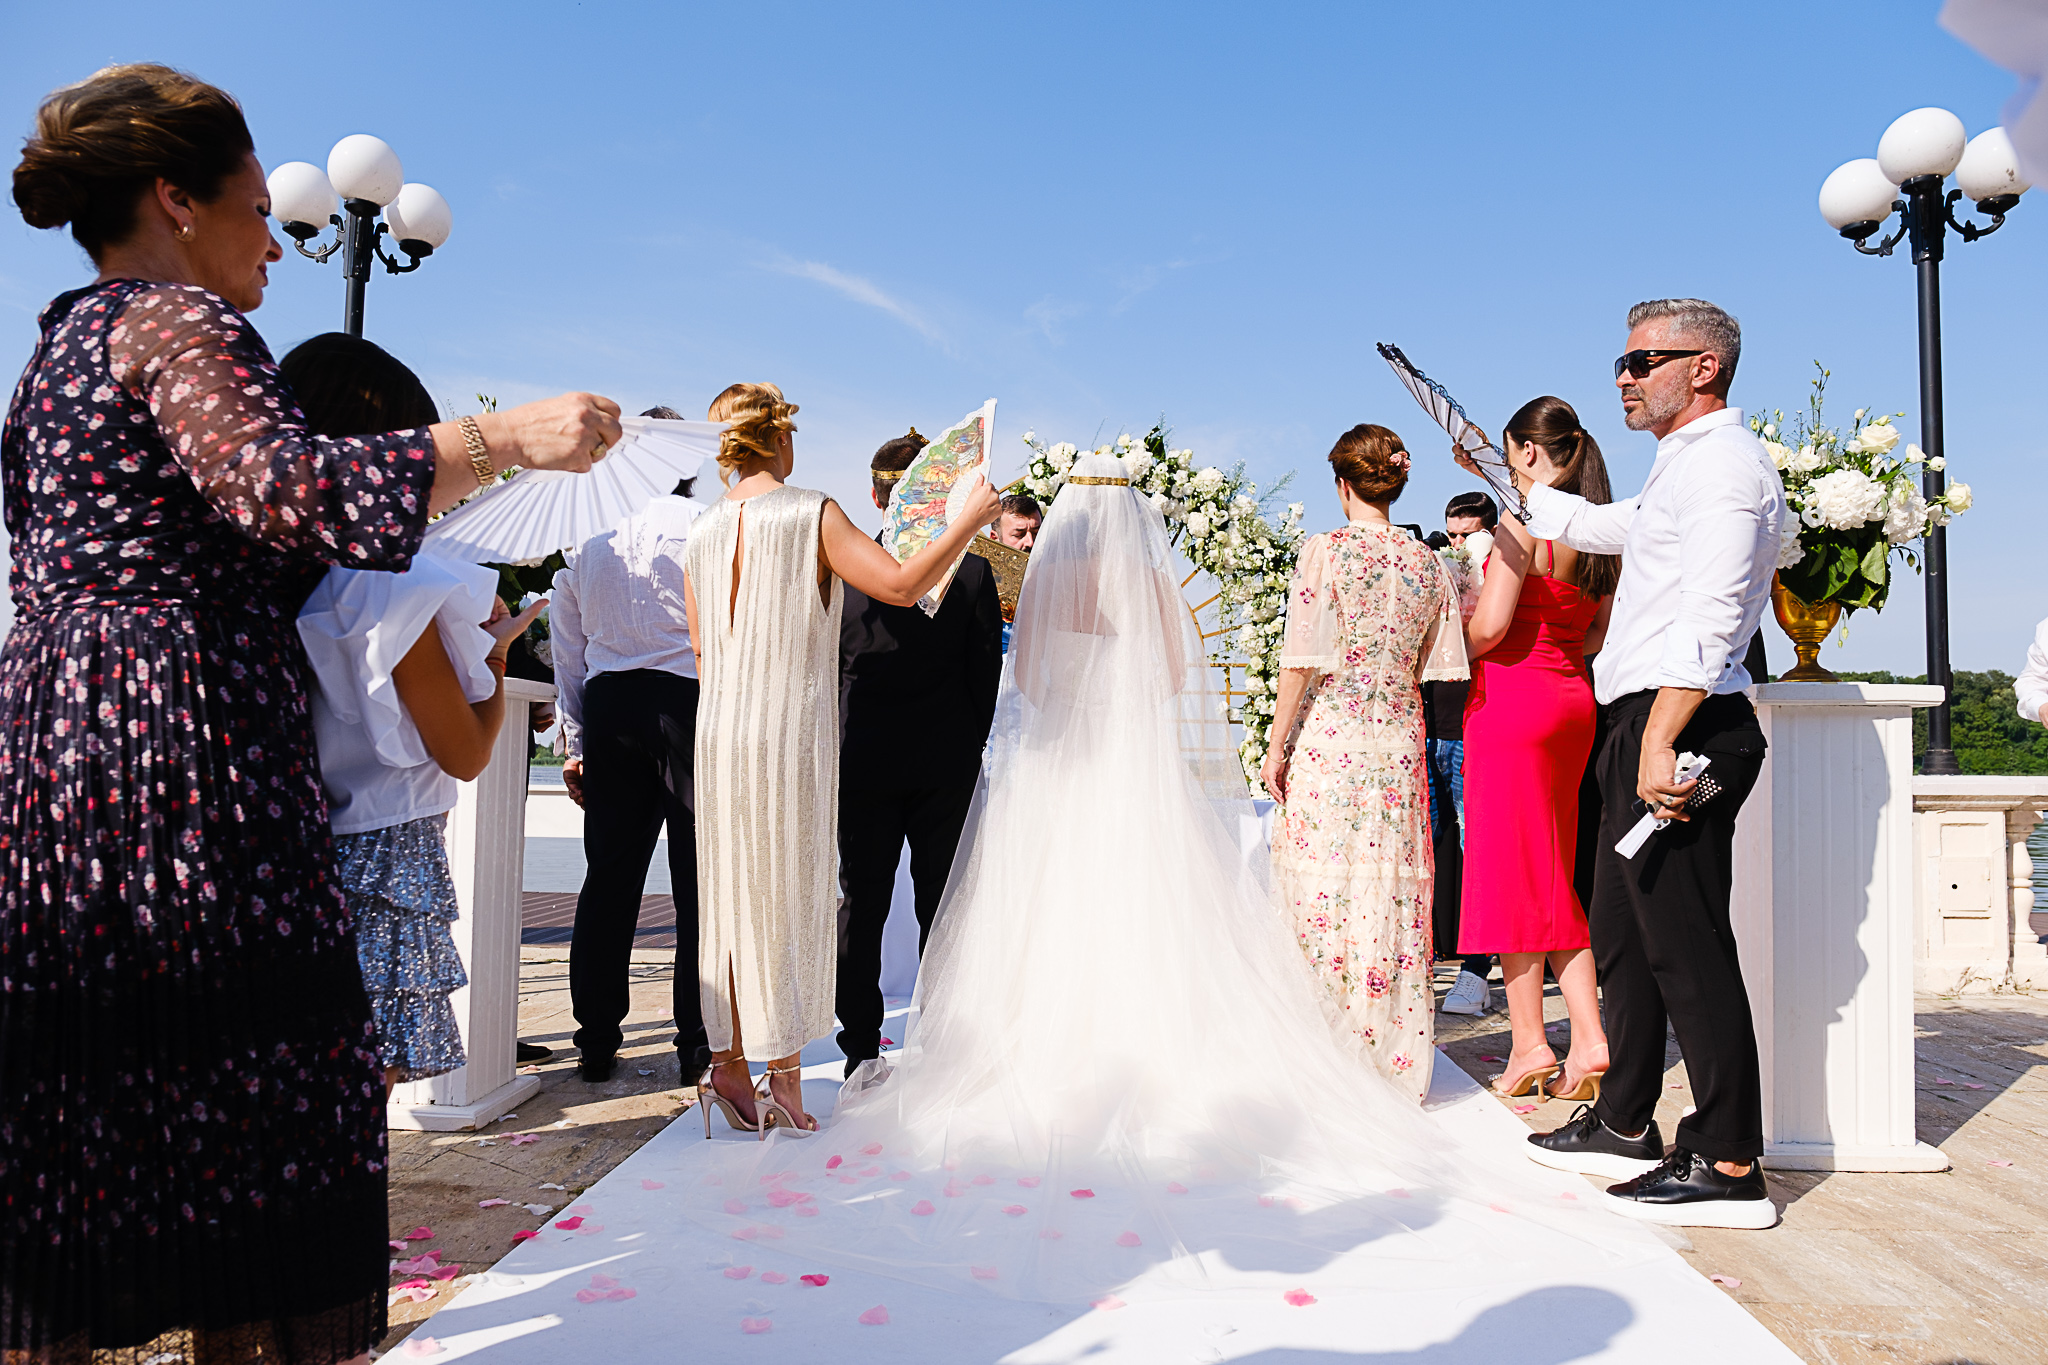 De ce sa alegi o nunta in aer liber: avantaje si dezavantaje